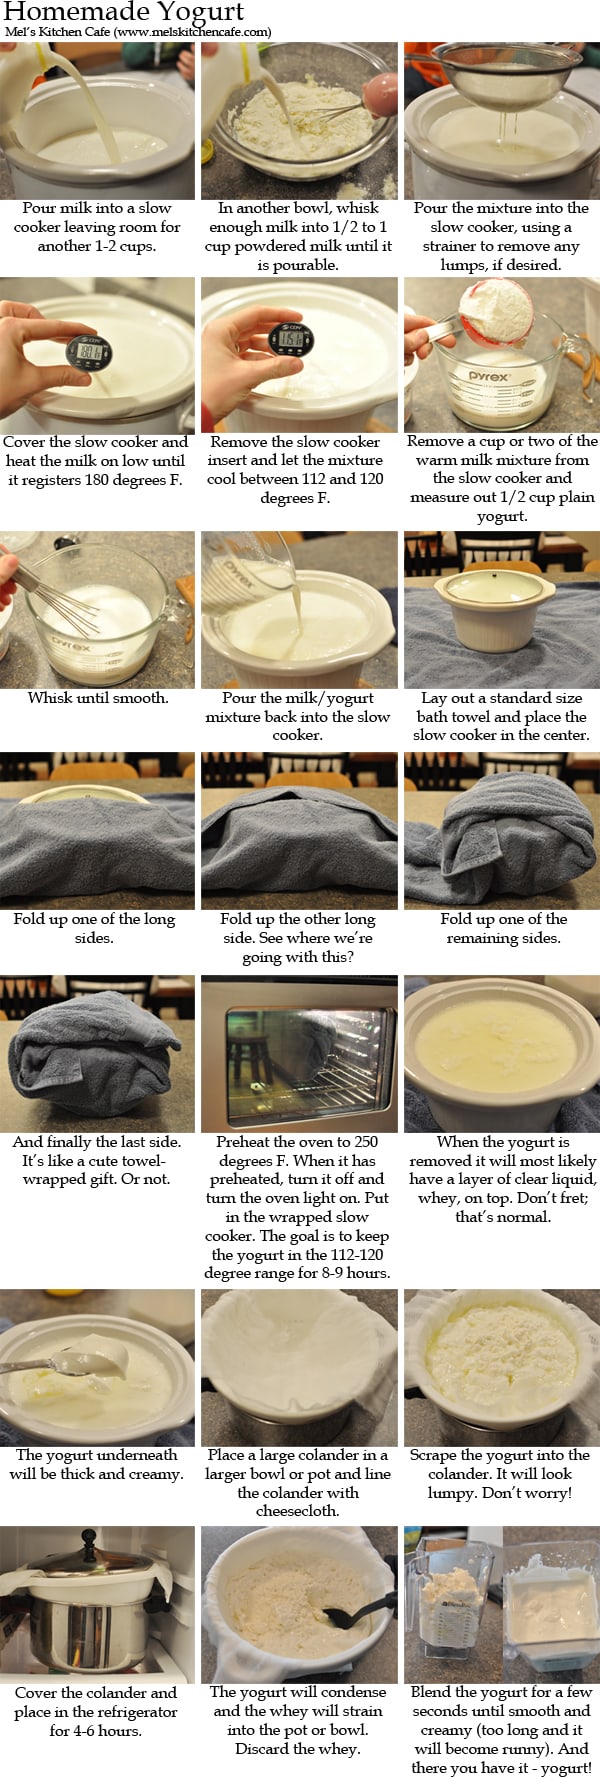 DIY Homemade Yogurt